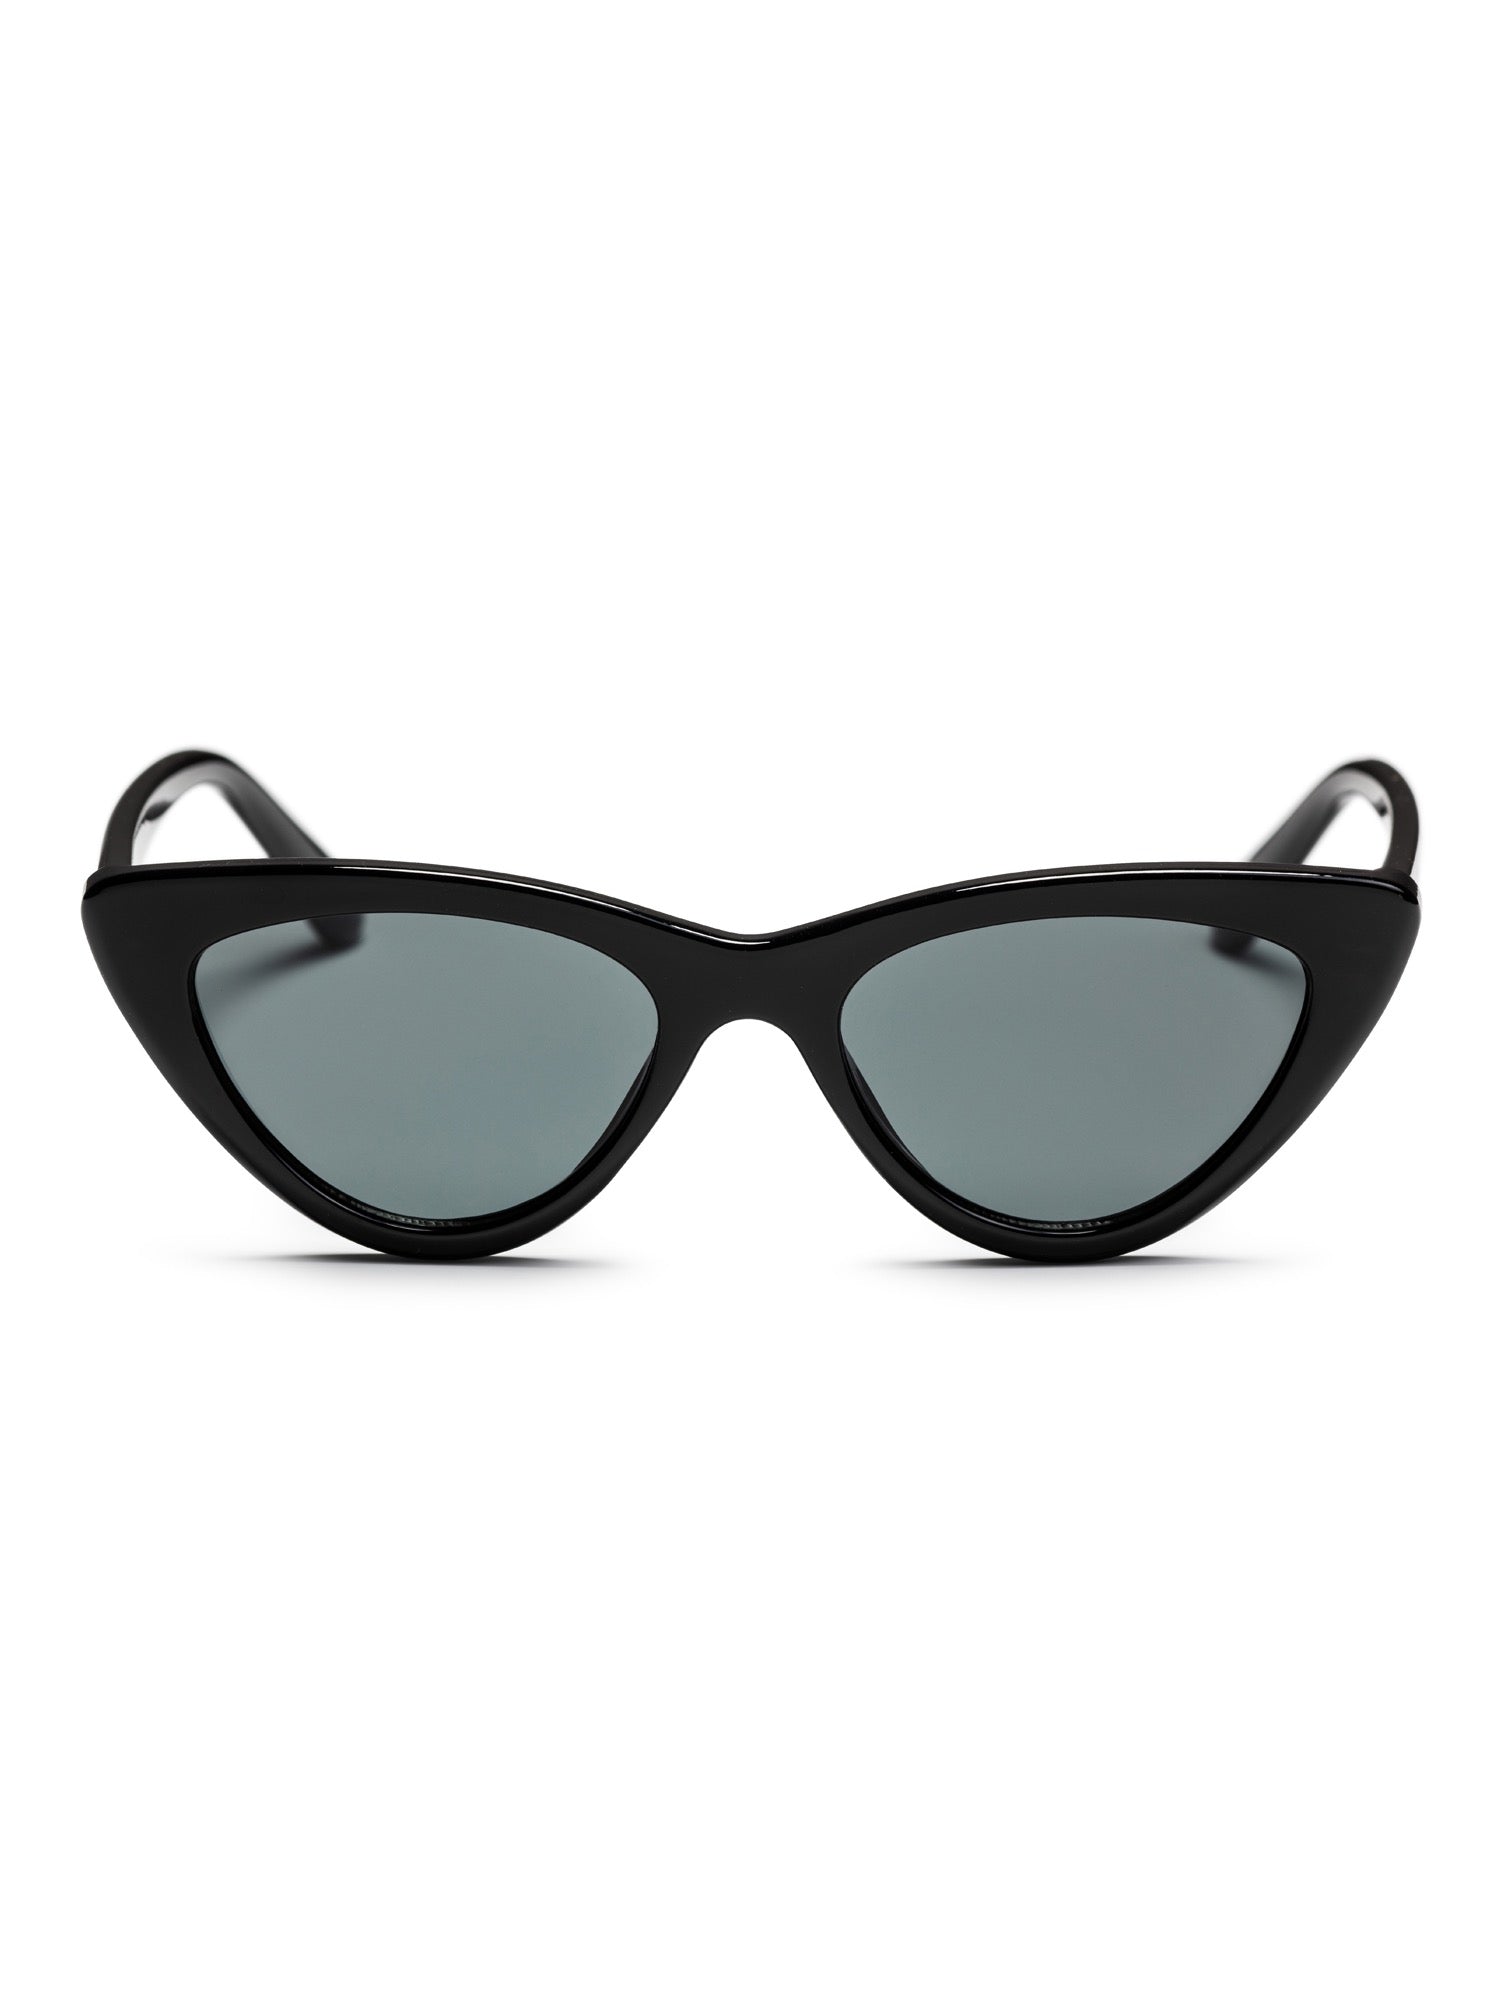 CHPO Amy Sunglasses - Recycled Plastic Black / Black Sunglasses